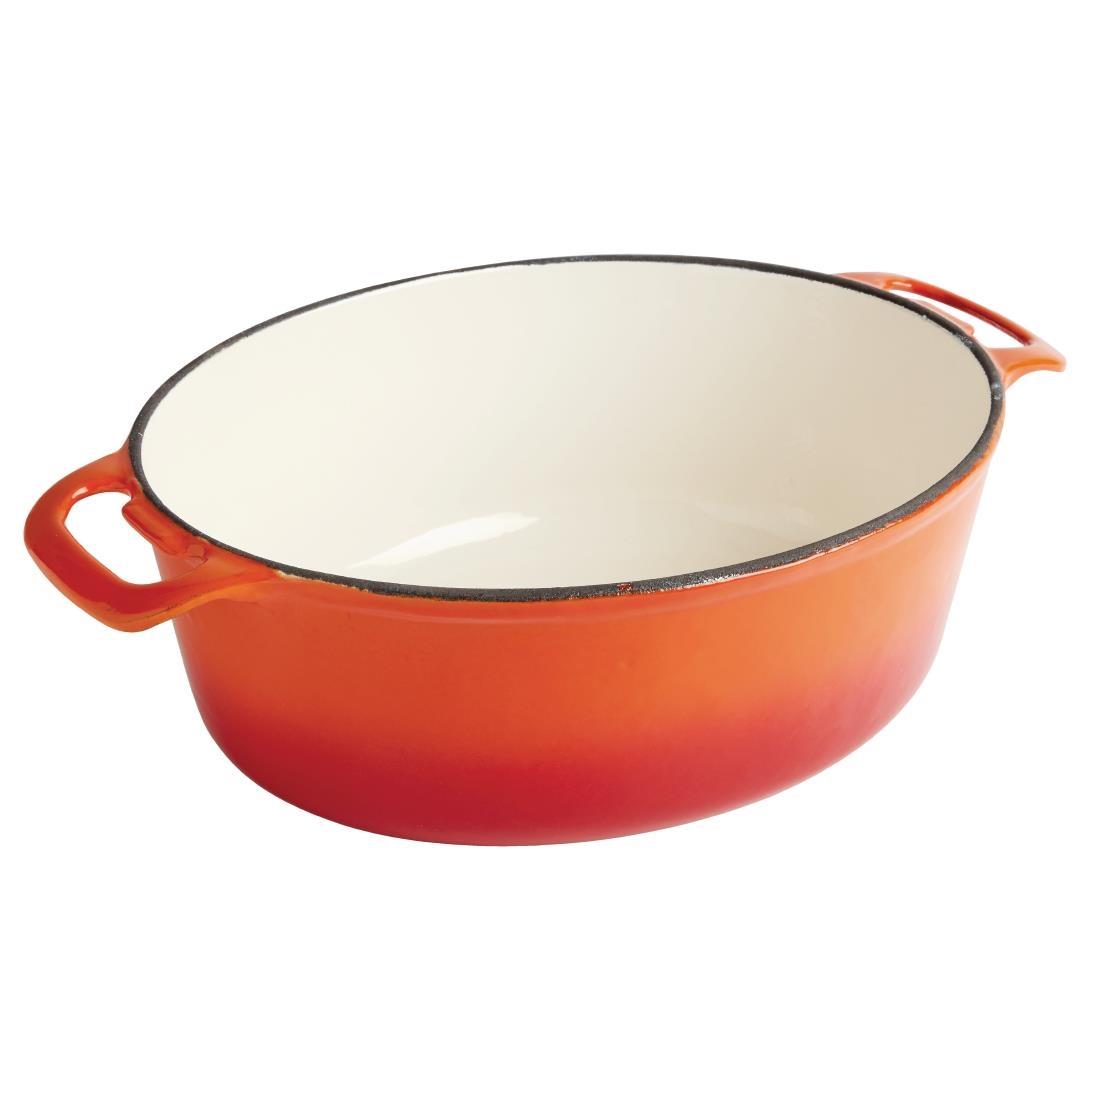 Vogue Orange Oval Casserole Dish 5Ltr - GH311  - 2